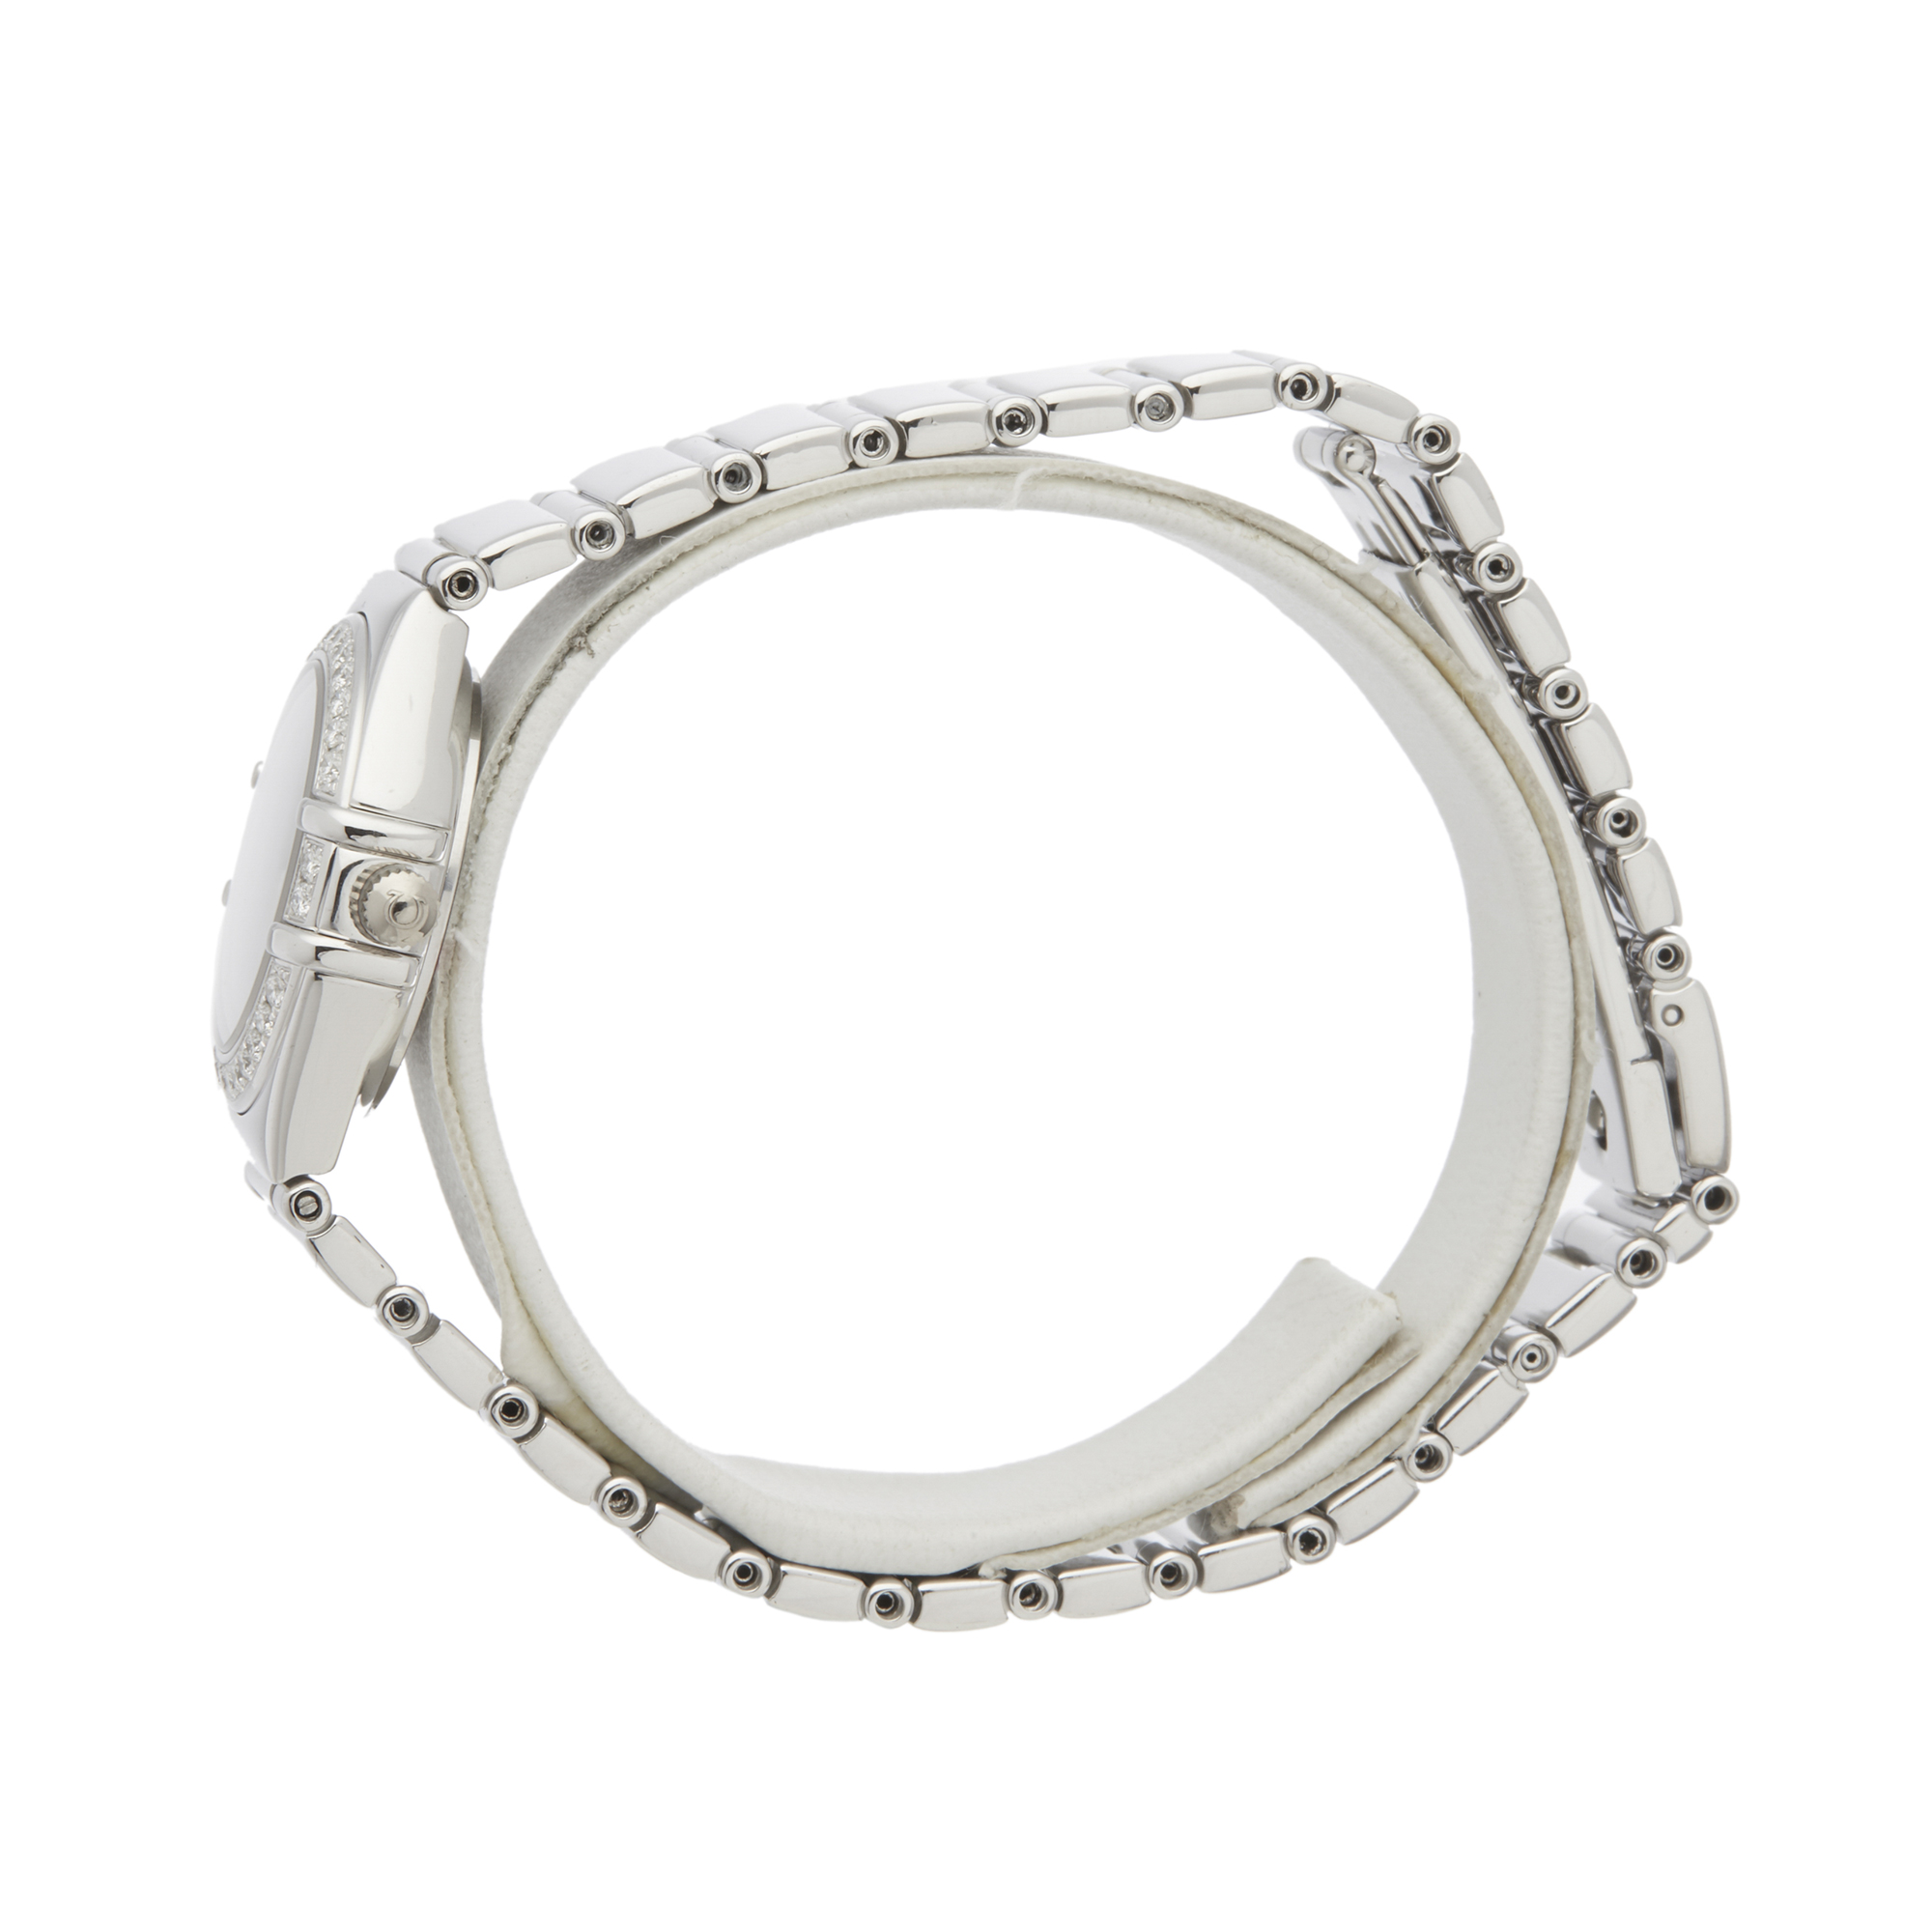 Omega Constellation 1165.36 Ladies White Gold Diamond Watch - Image 6 of 7